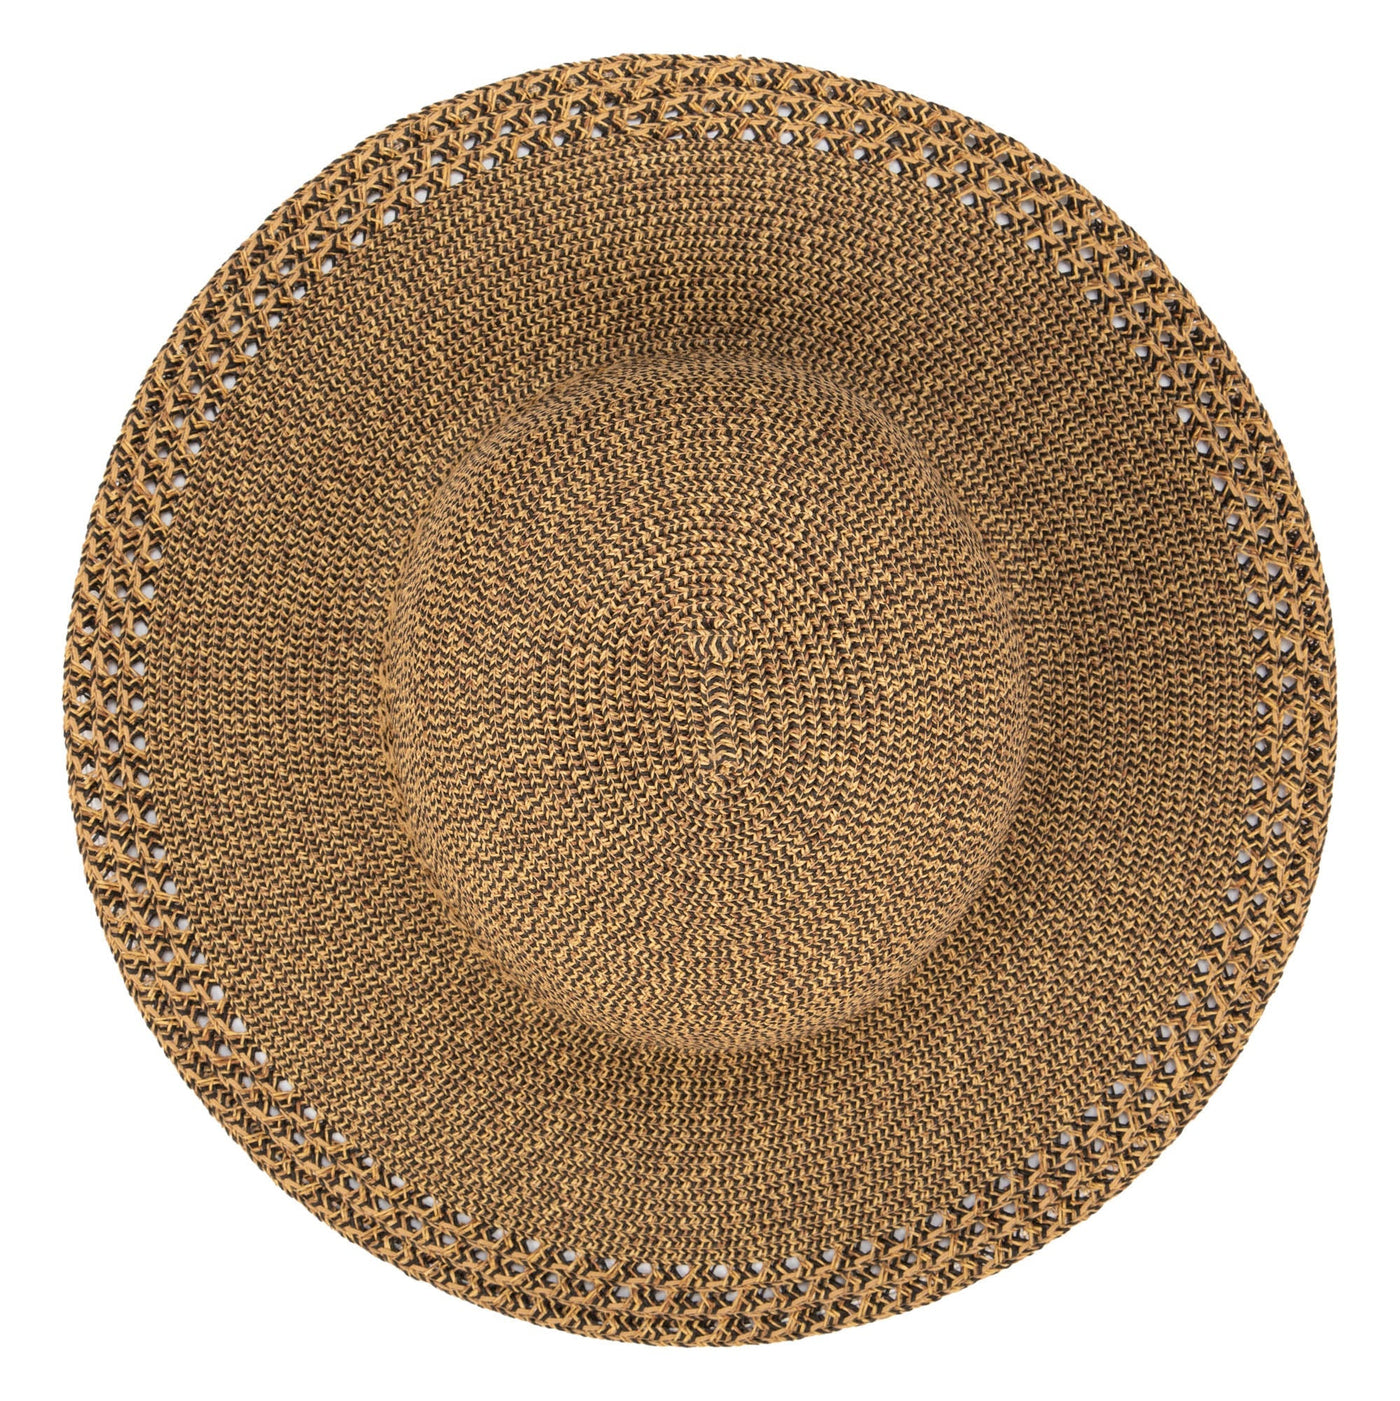 SUN BRIM - Everyday Sun Hat - Women's Sun Hat W/ Open Weave Stripes